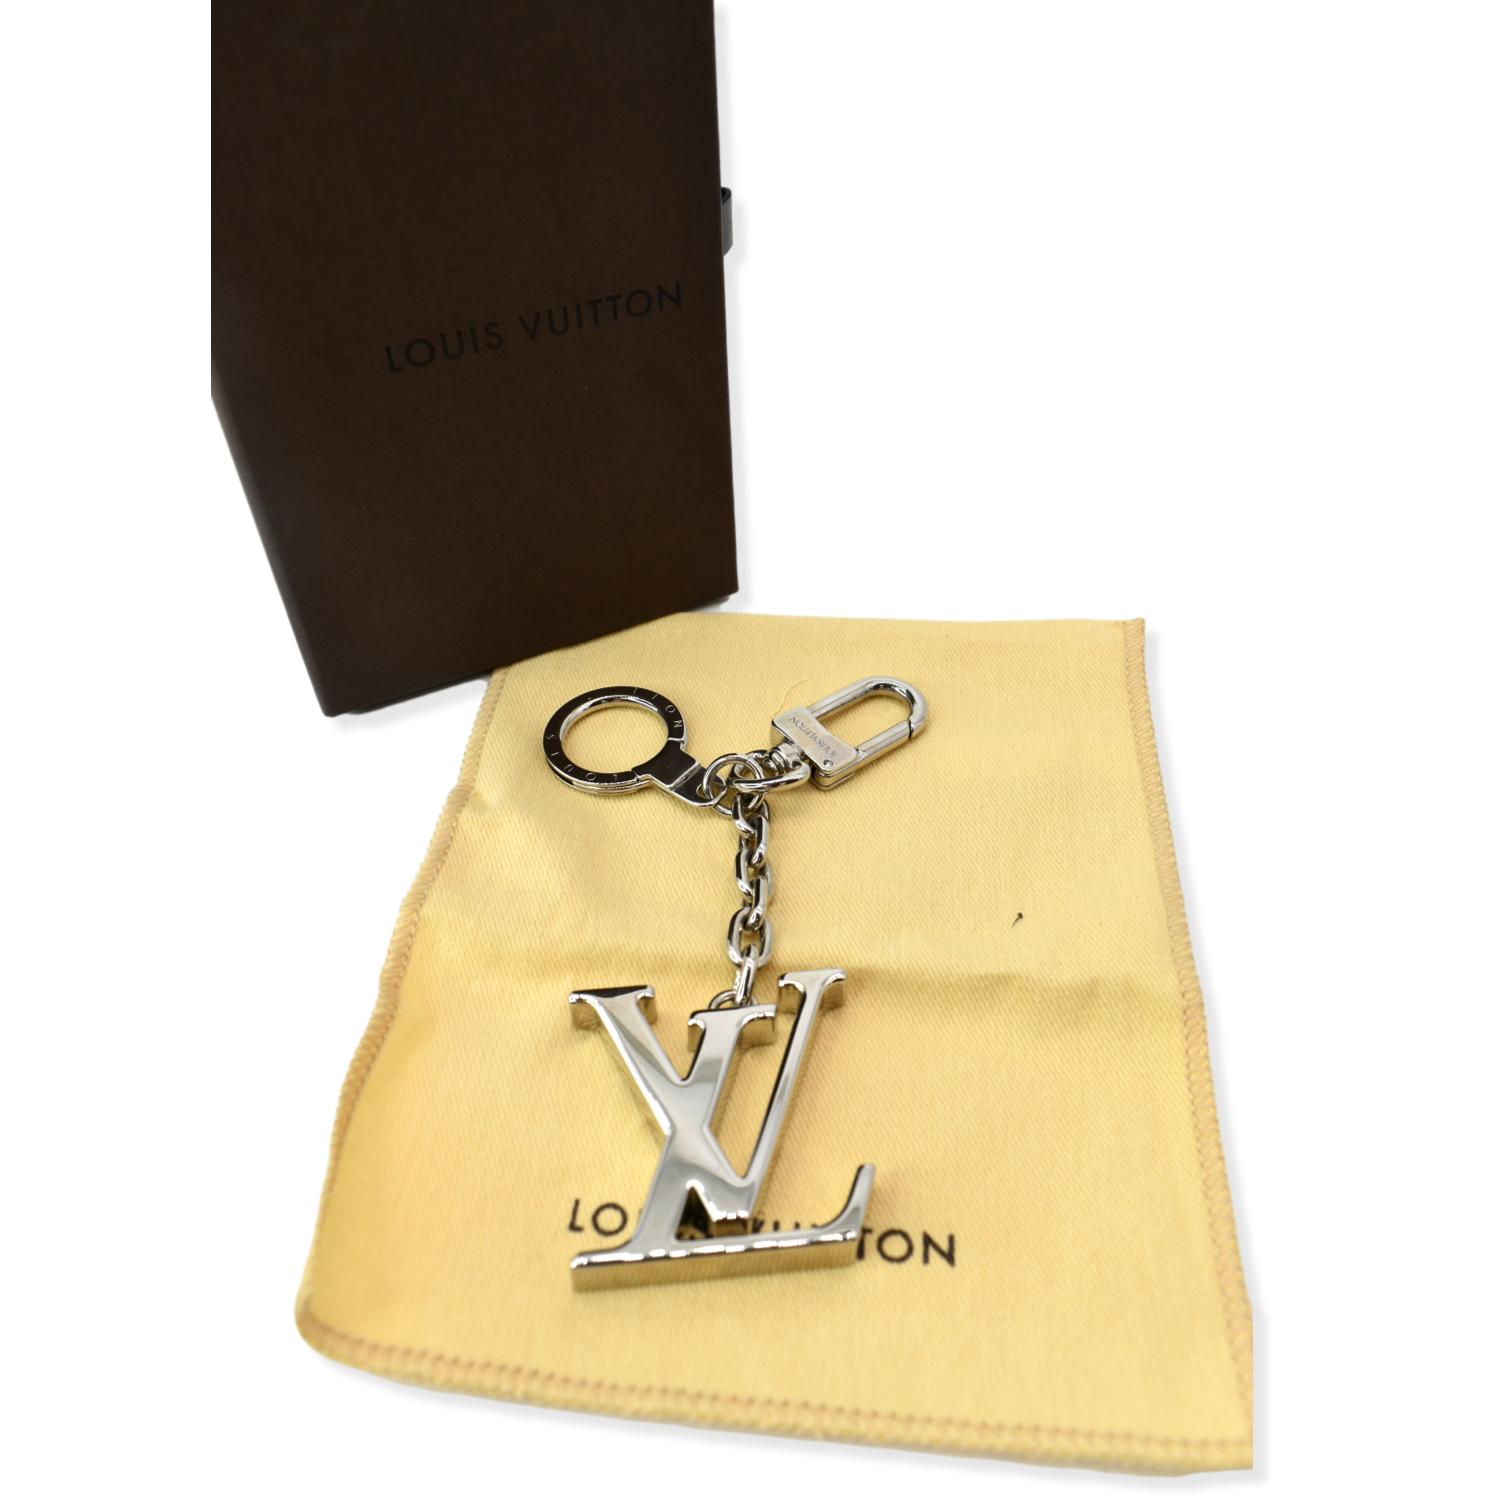 Louis Vuitton LV Charms Card Holder